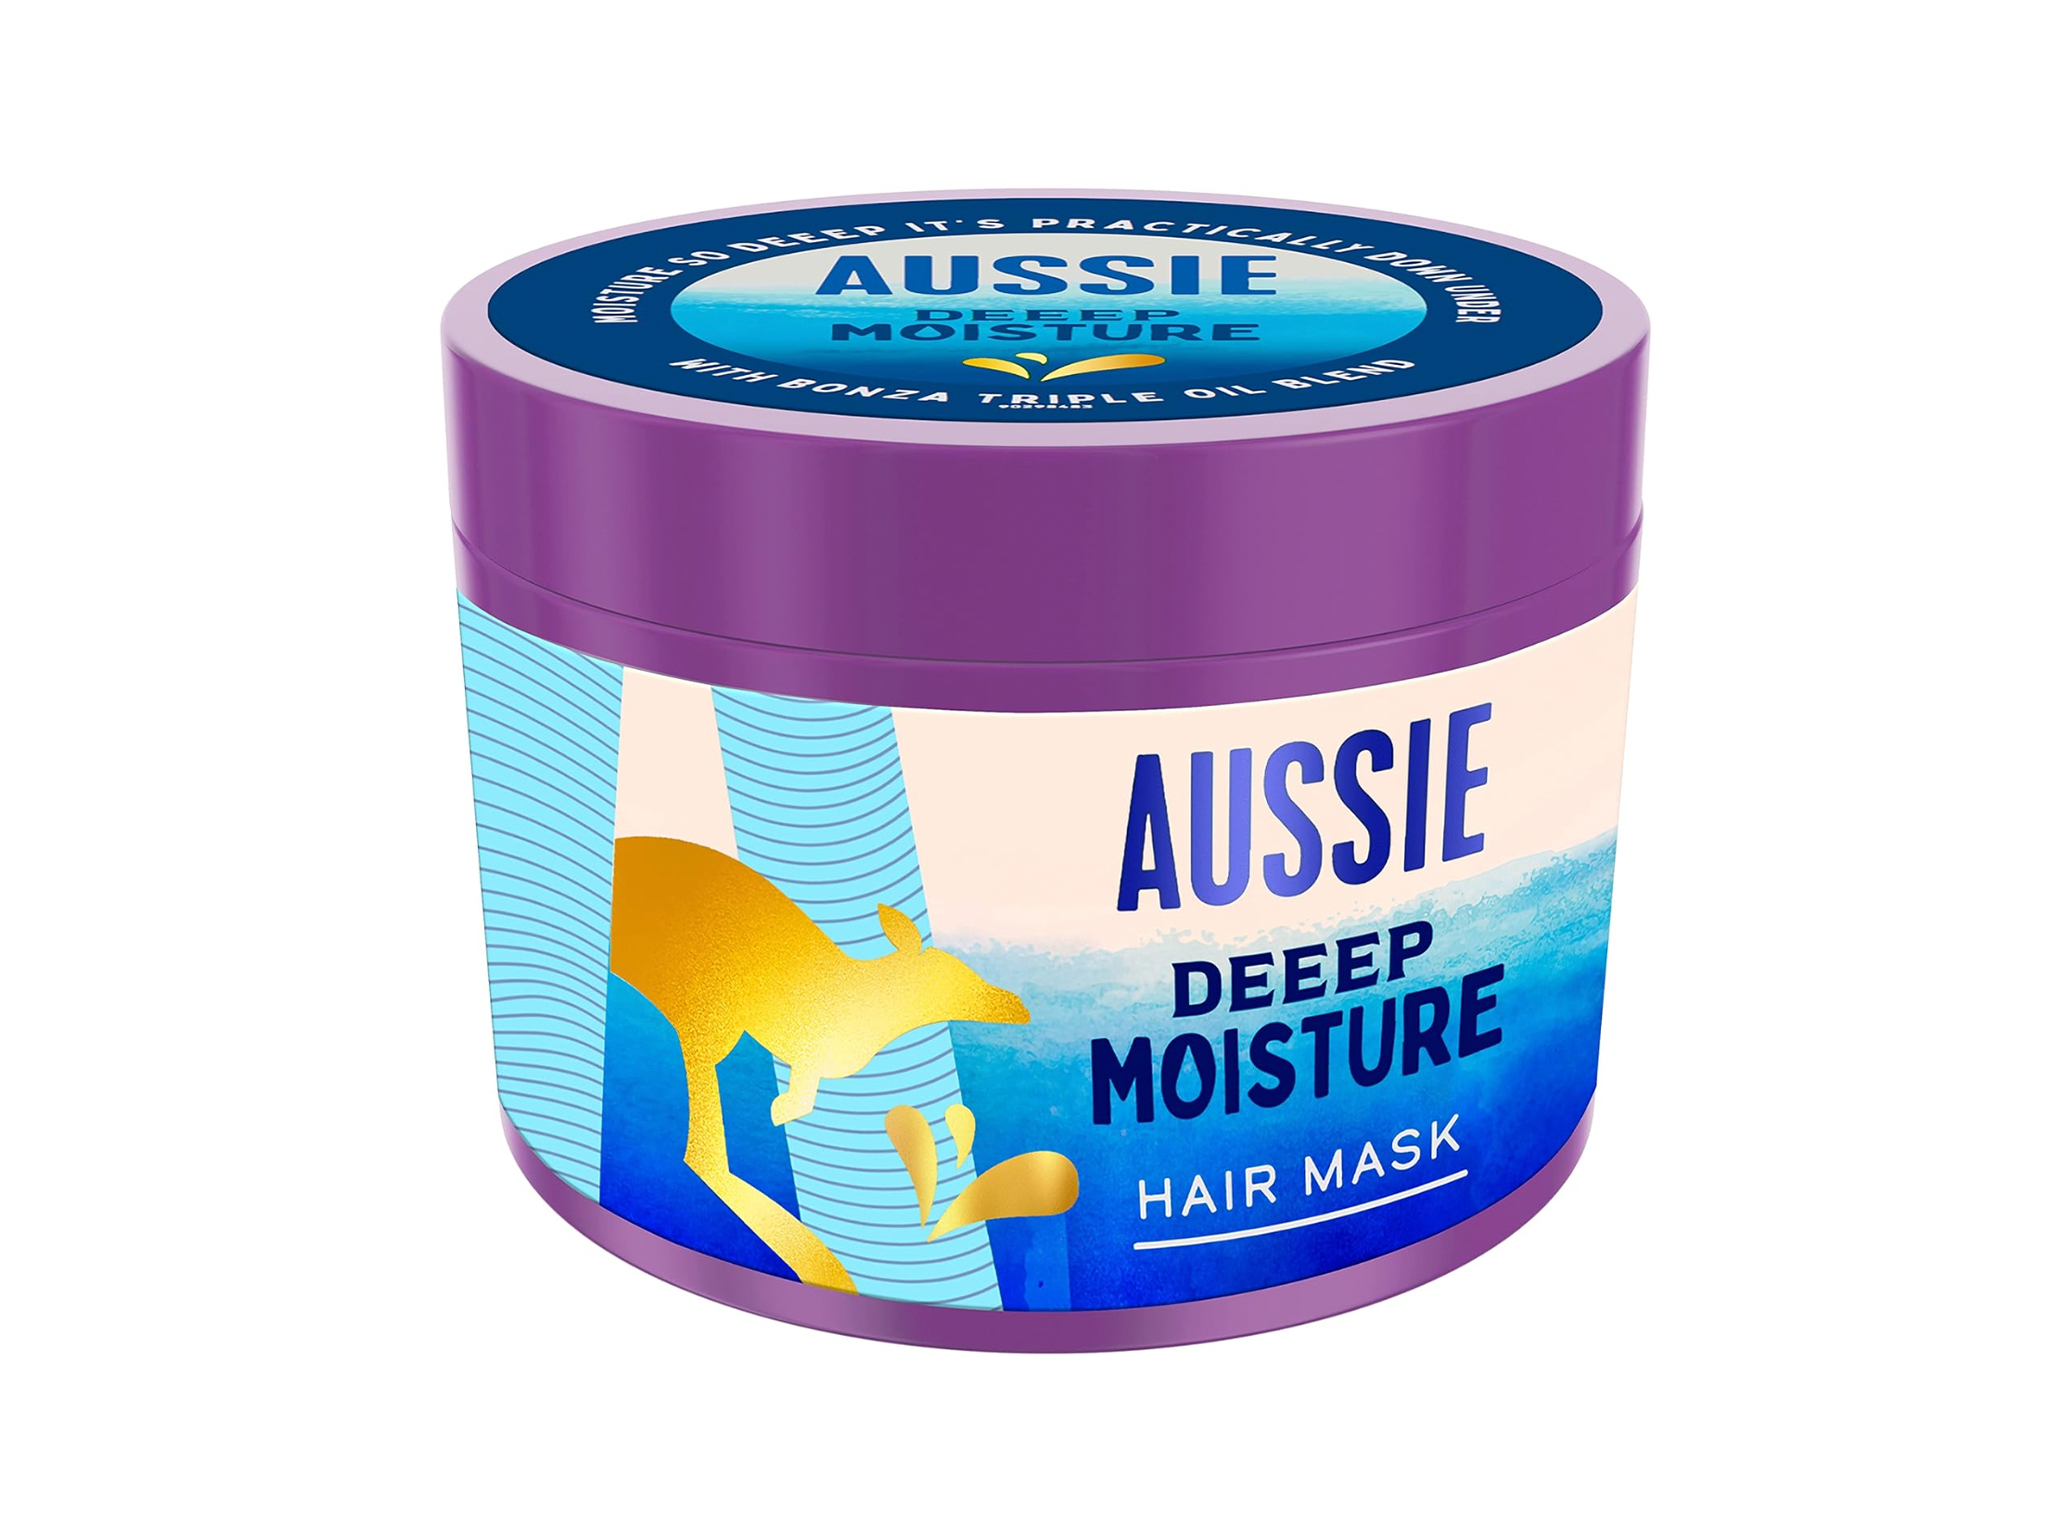 Aussie deep moisture hair mask